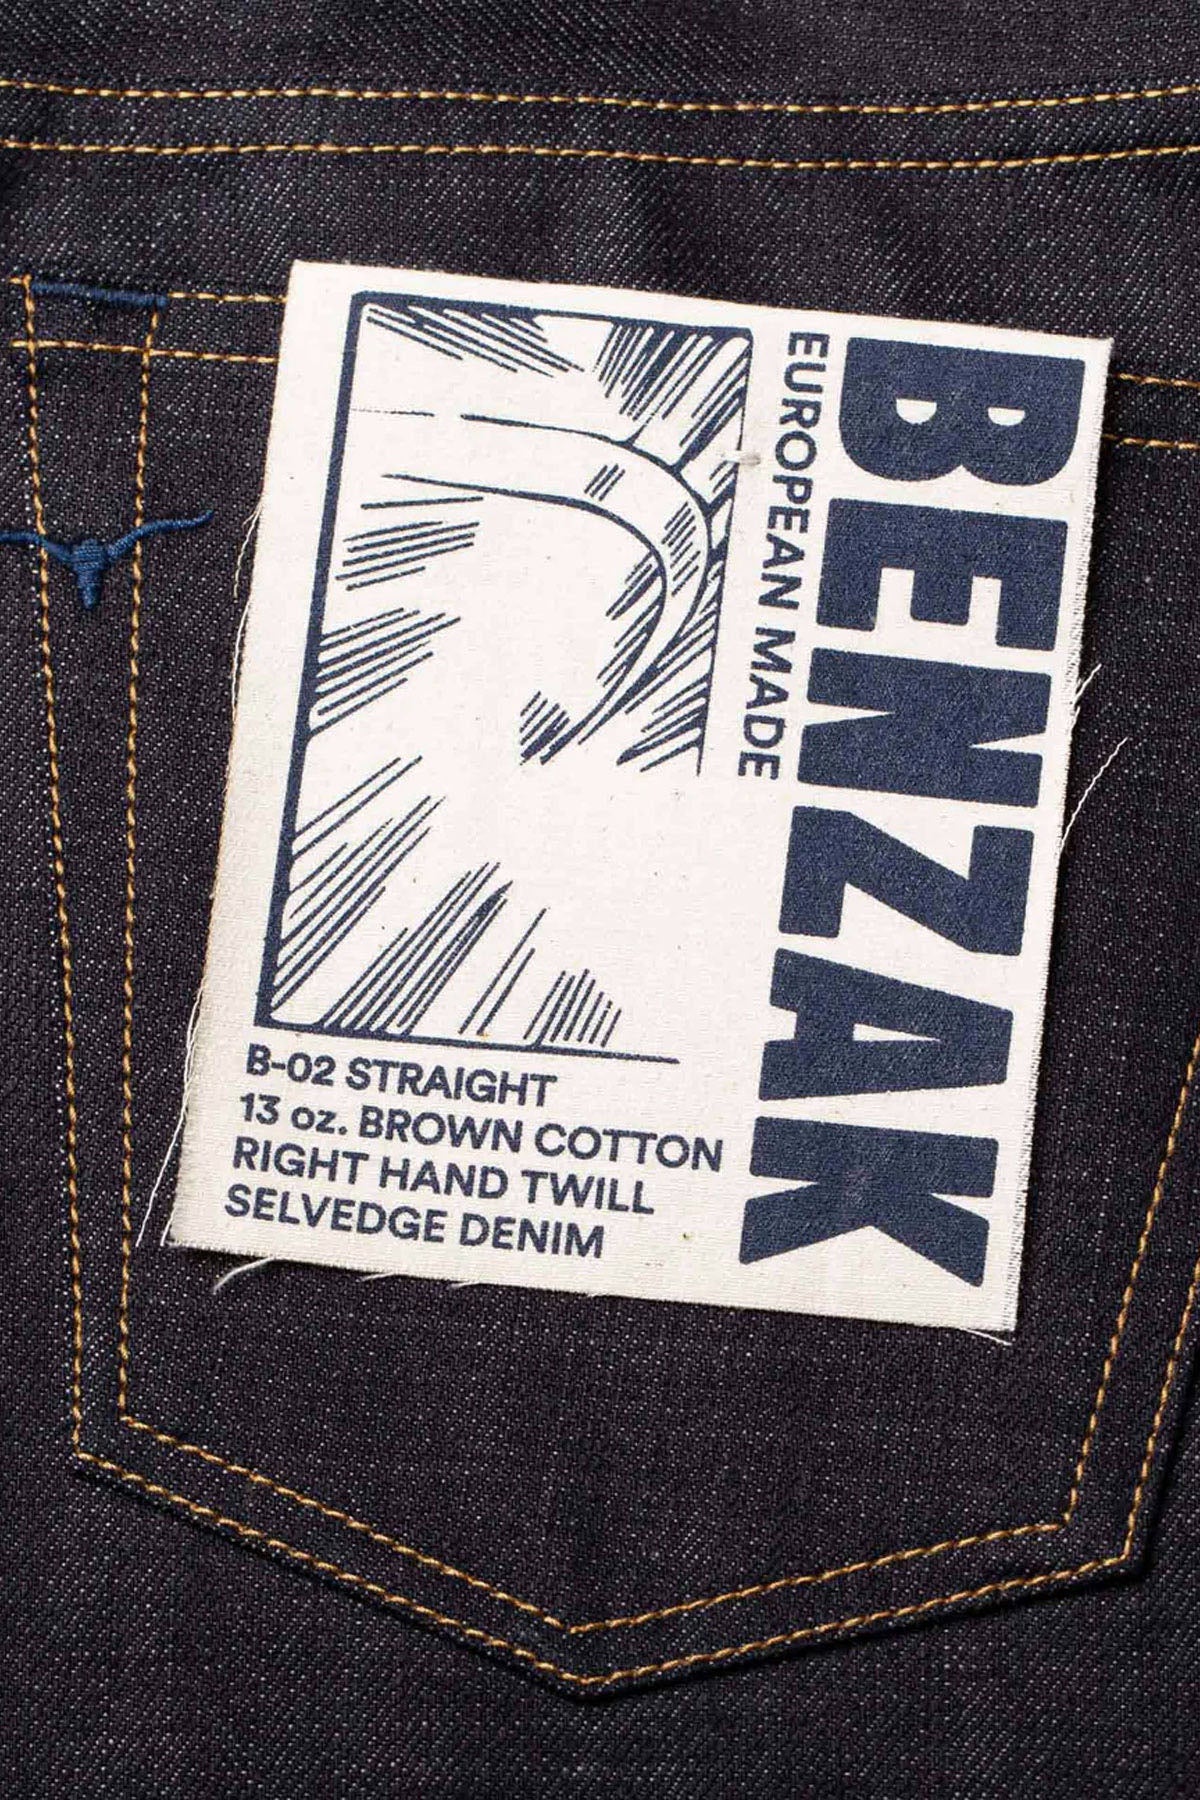 Benzak - B-02 STRAIGHT 13 oz. brown cotton selvedge